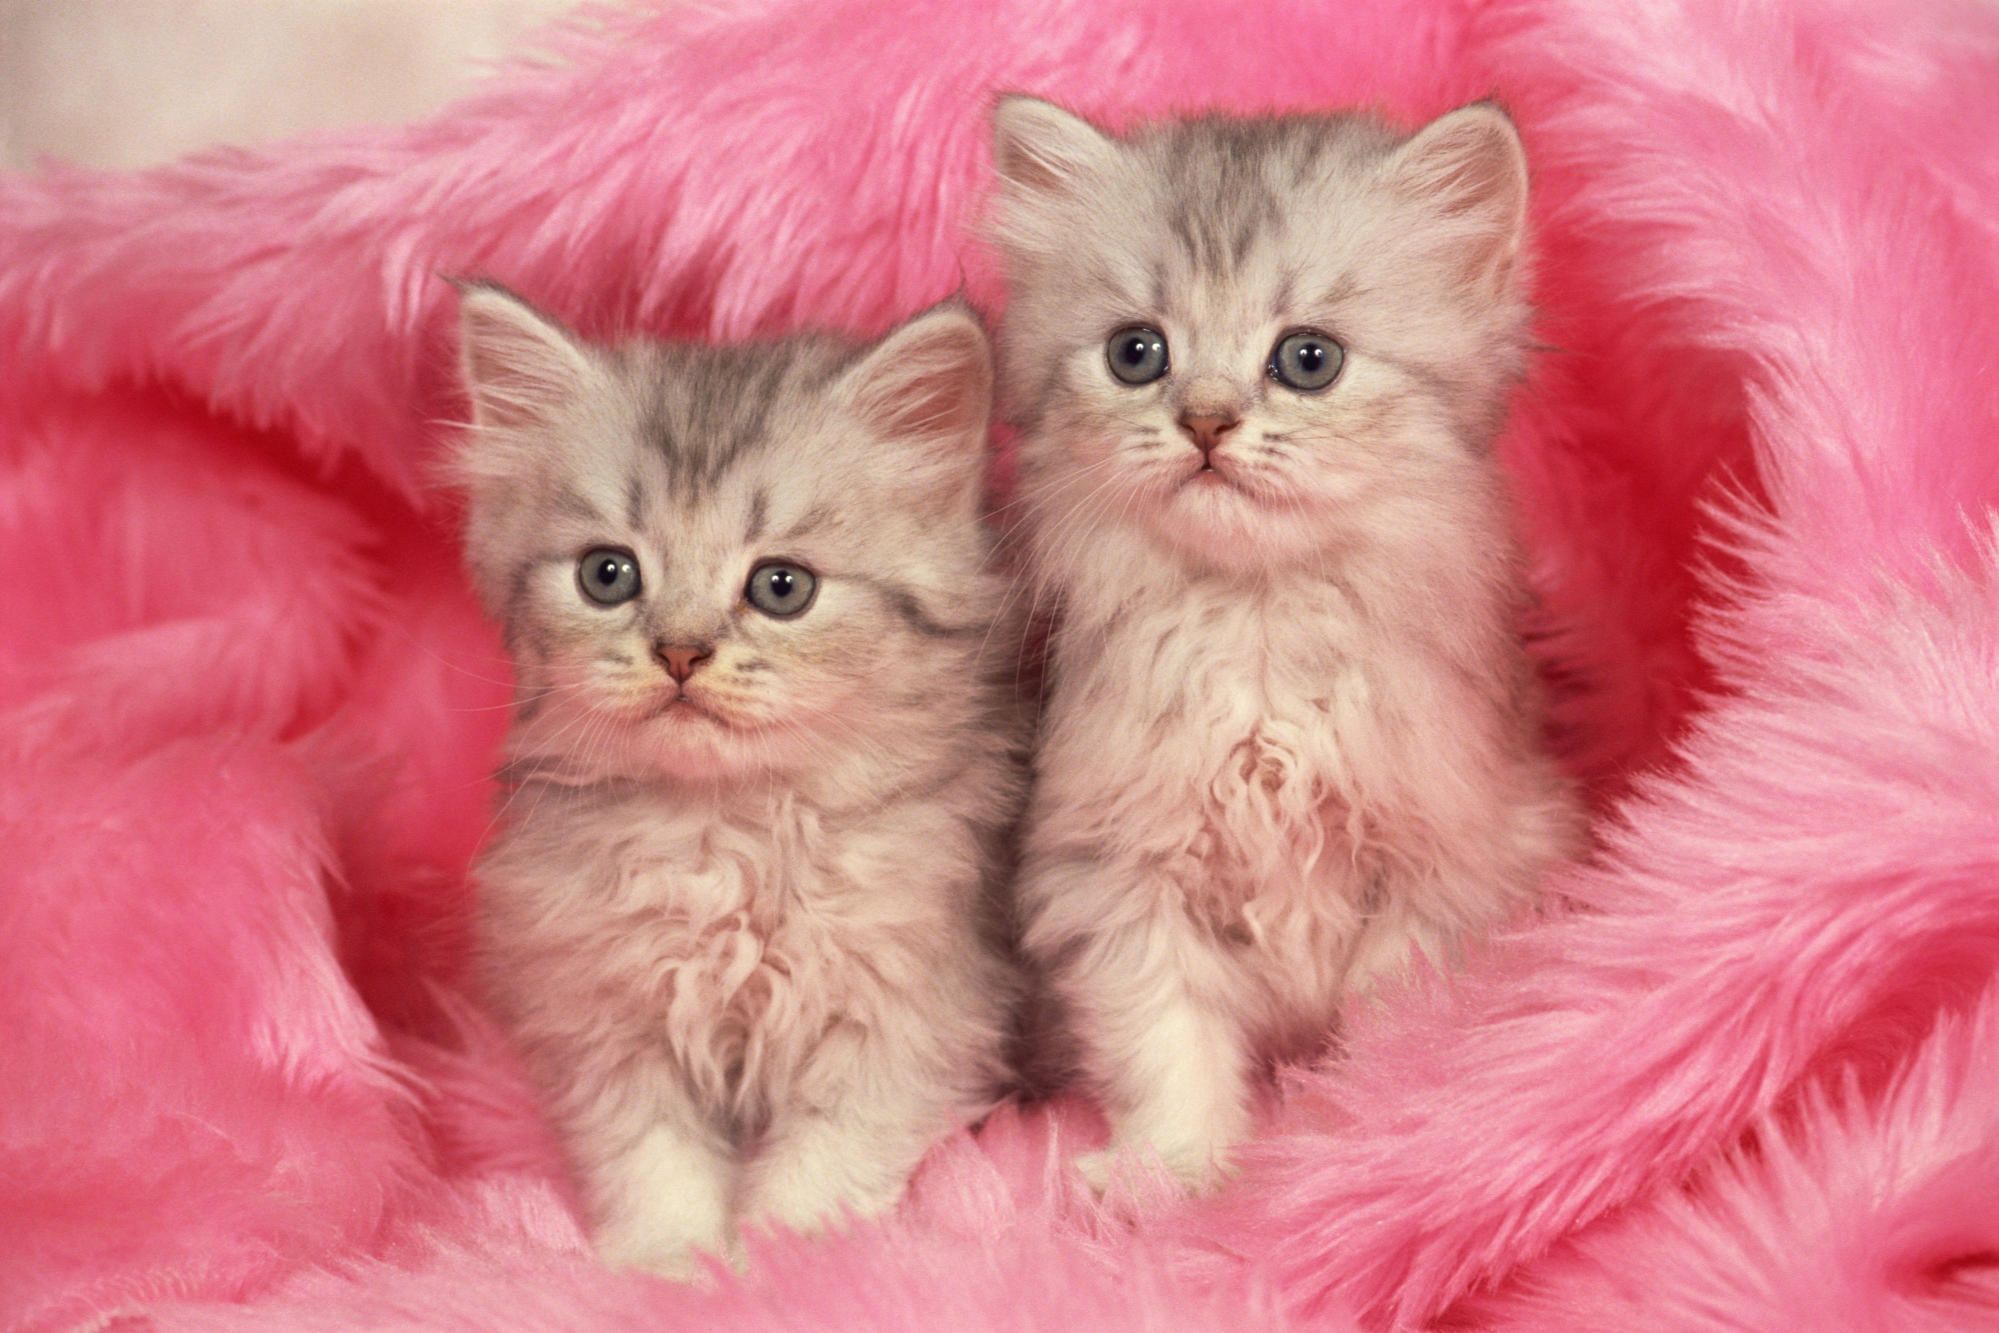 Free download 55 Pink Kitten Wallpapers Download at WallpaperBro [1999x1333] for your Desktop